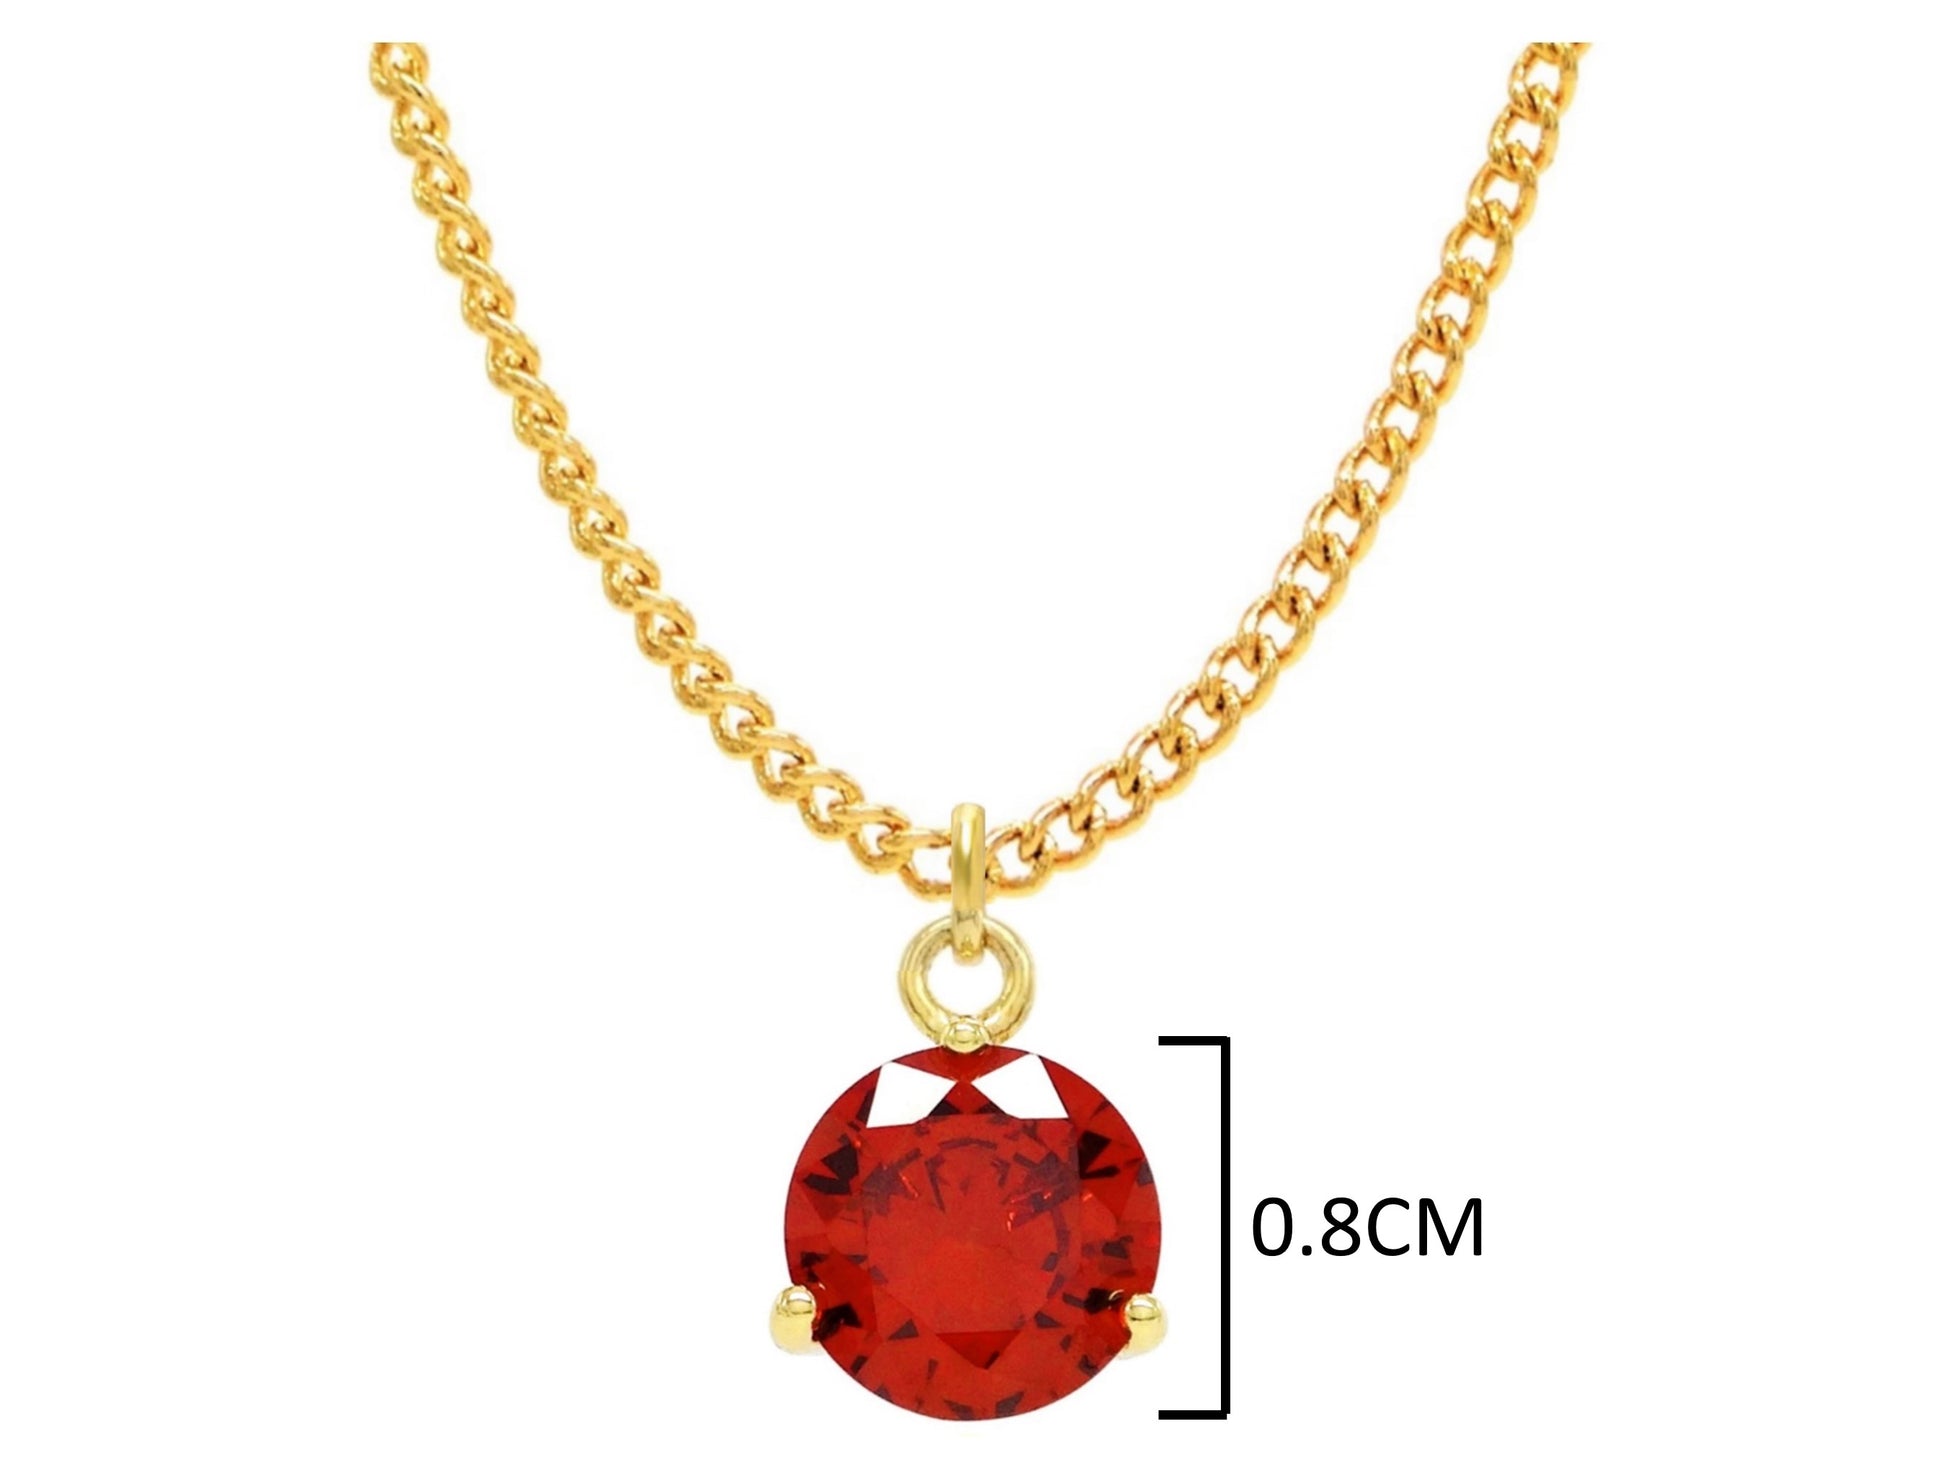 Red gemstone gold necklace MEASUREMENT